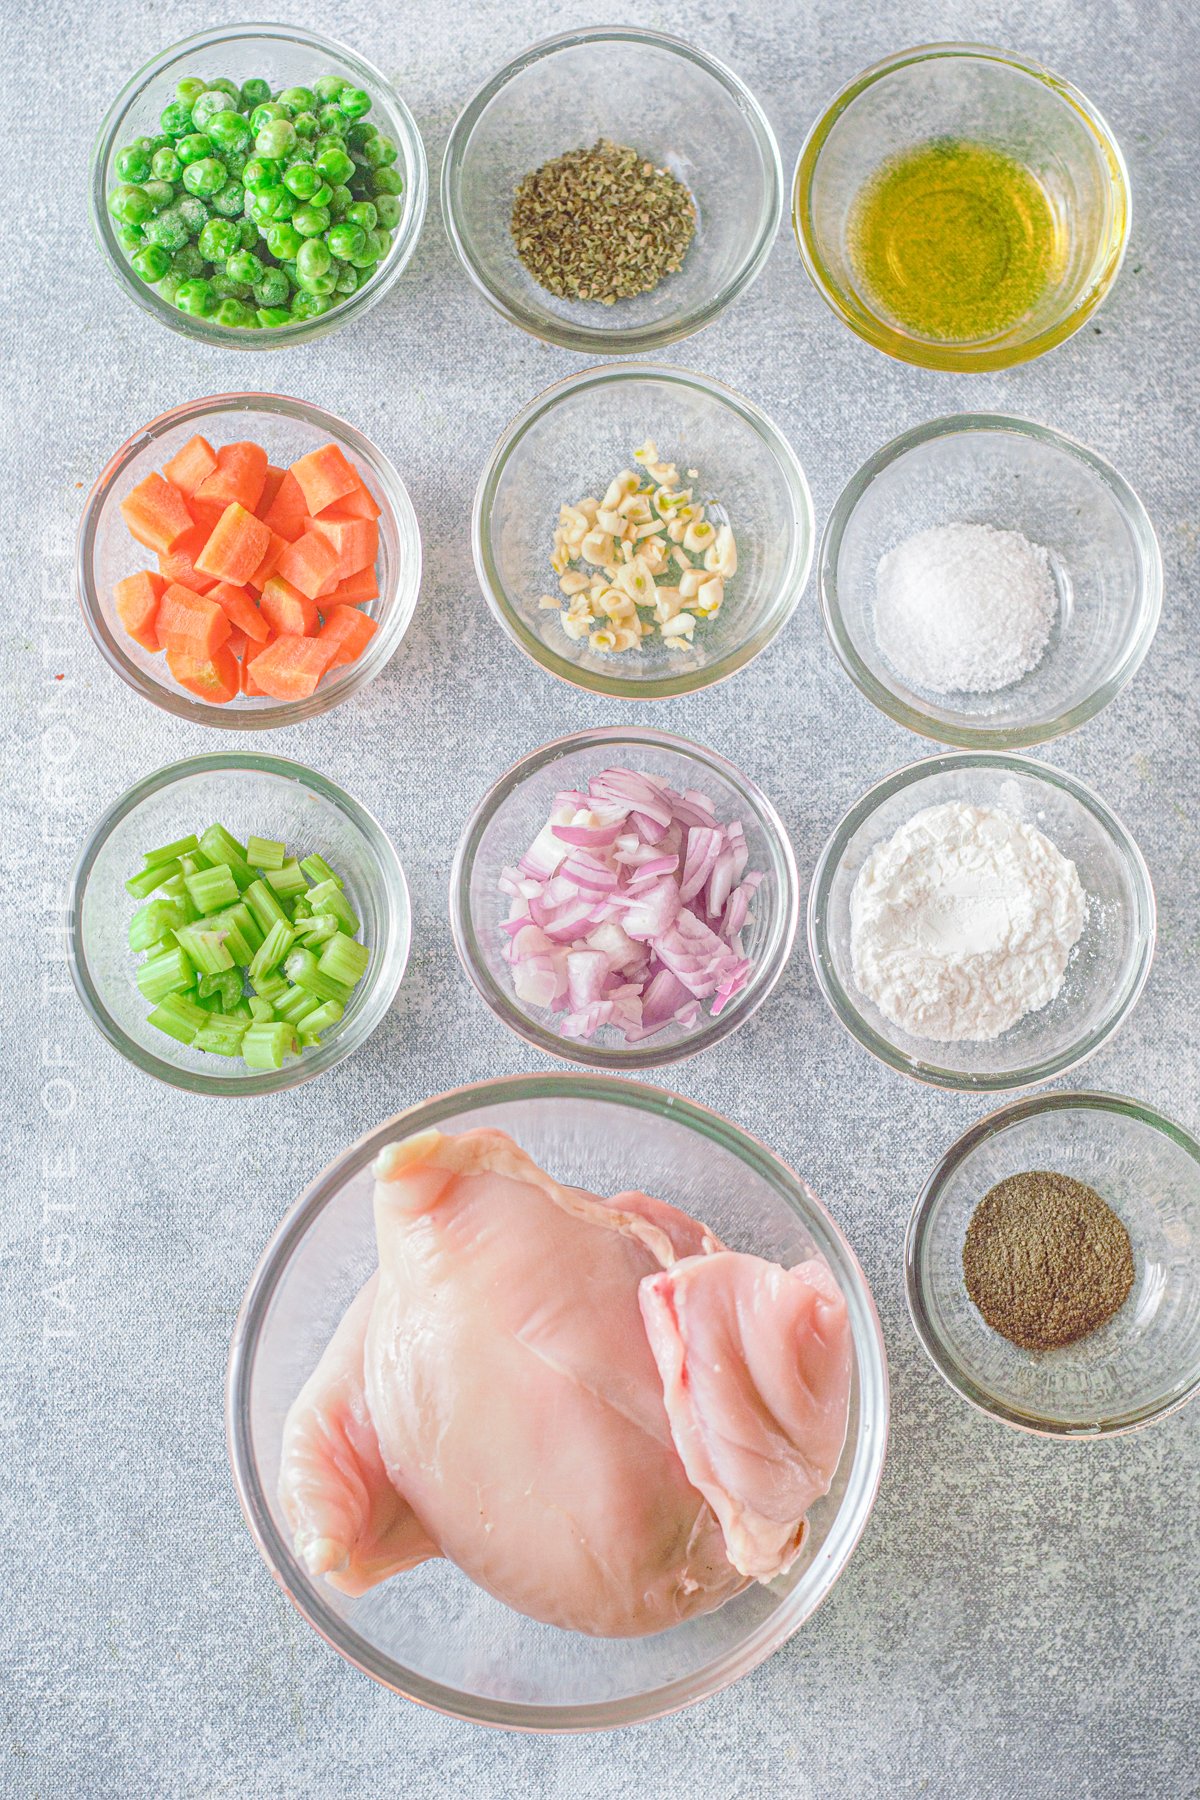 Ingredients for Instant Pot Chicken and Dumplings